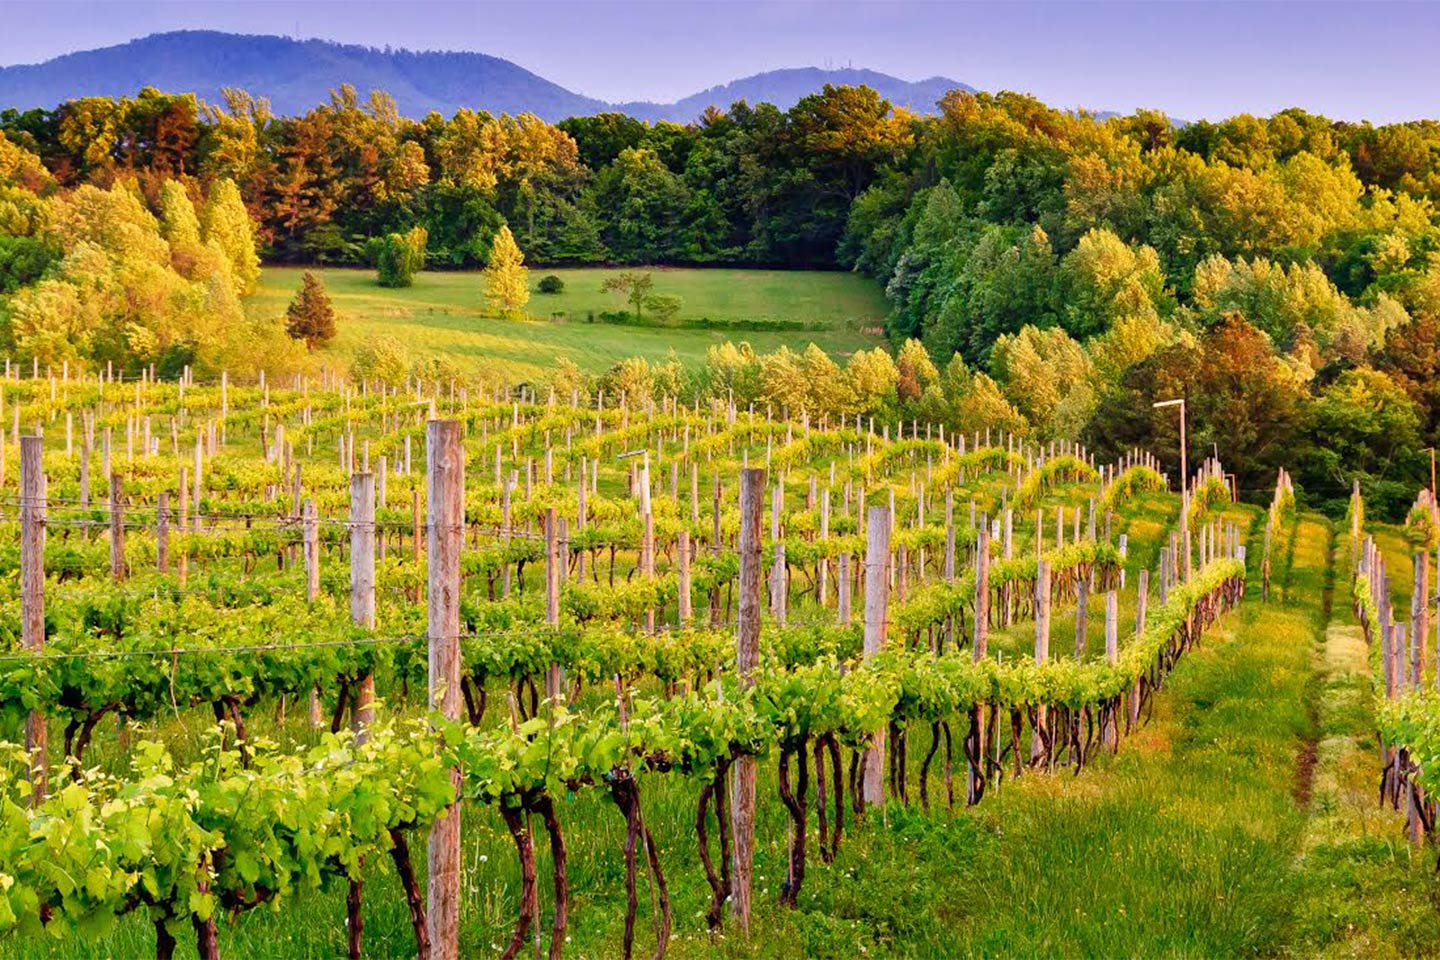 Vineyard in Central Virginia